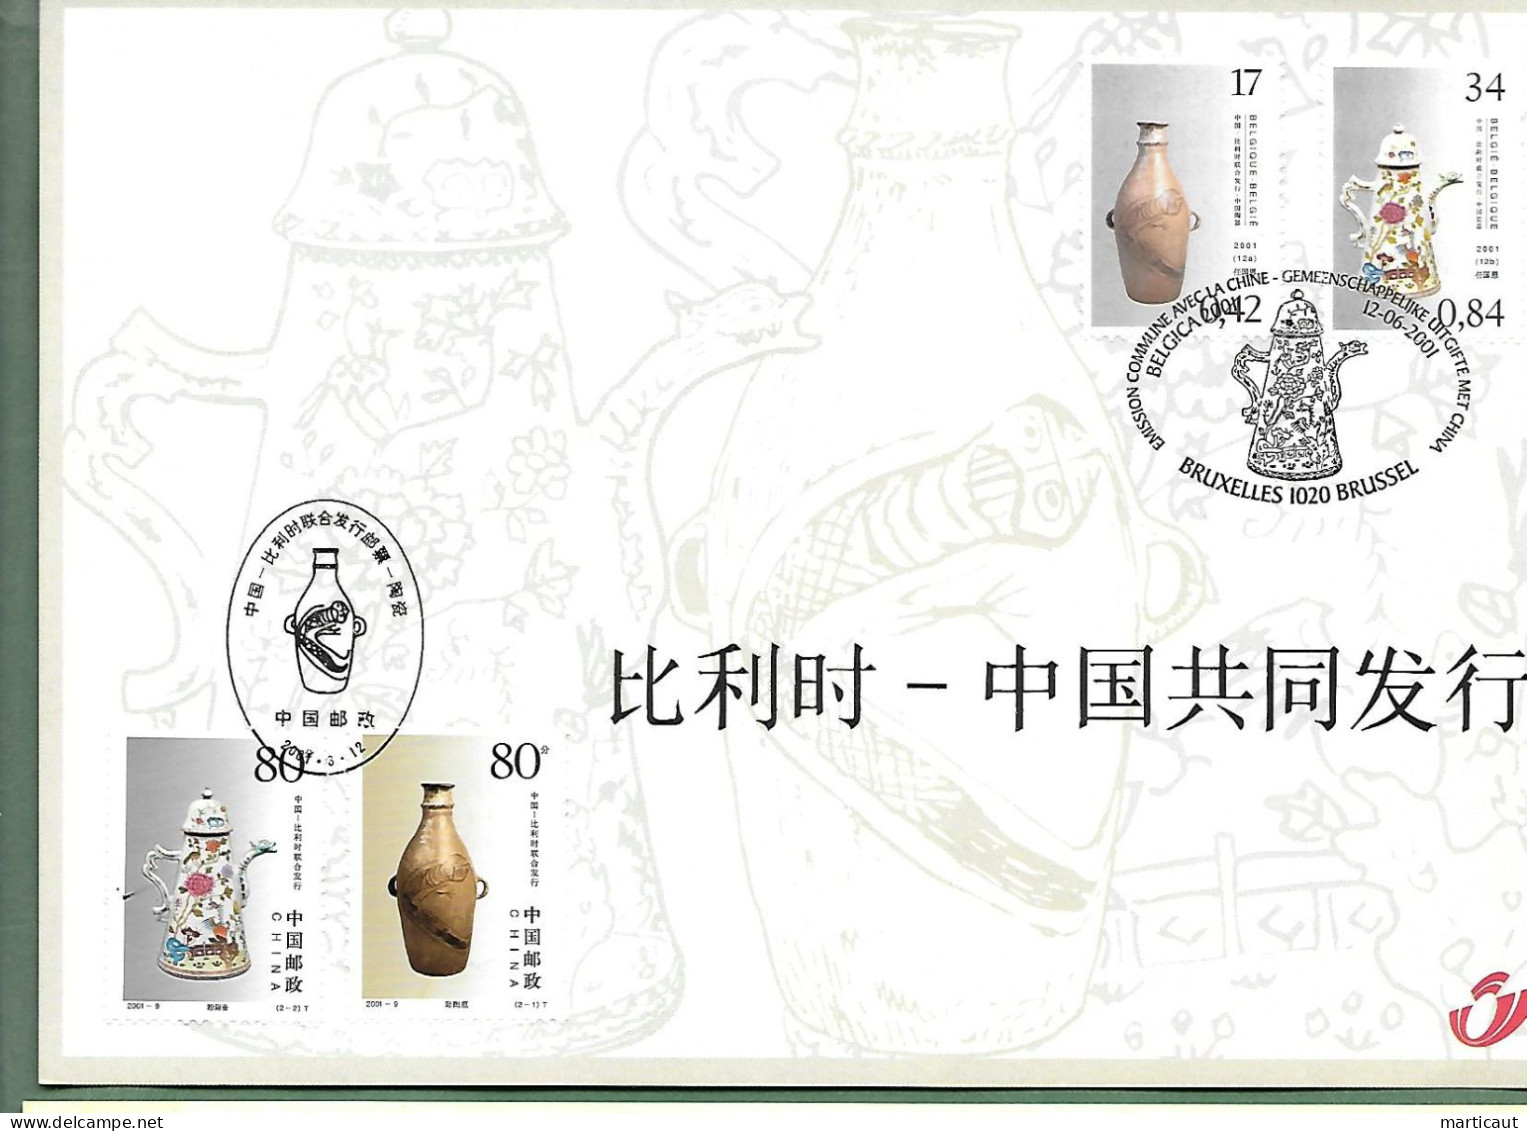 HK 3008 -- Belgique-Chine - Année 2001 - Cartoline Commemorative - Emissioni Congiunte [HK]